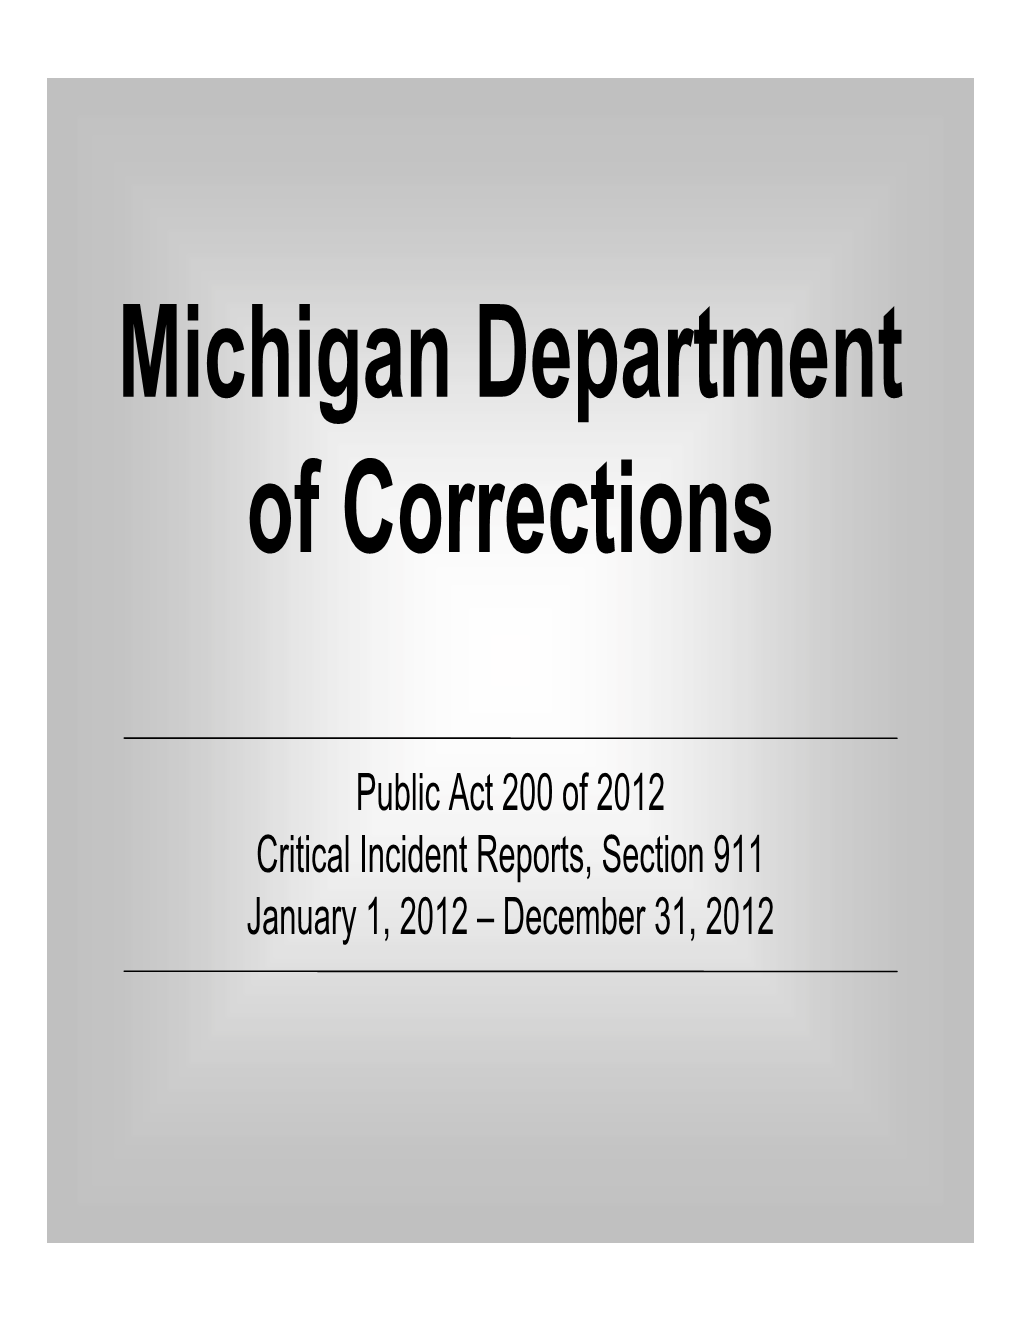 Michigan Department of Corrections